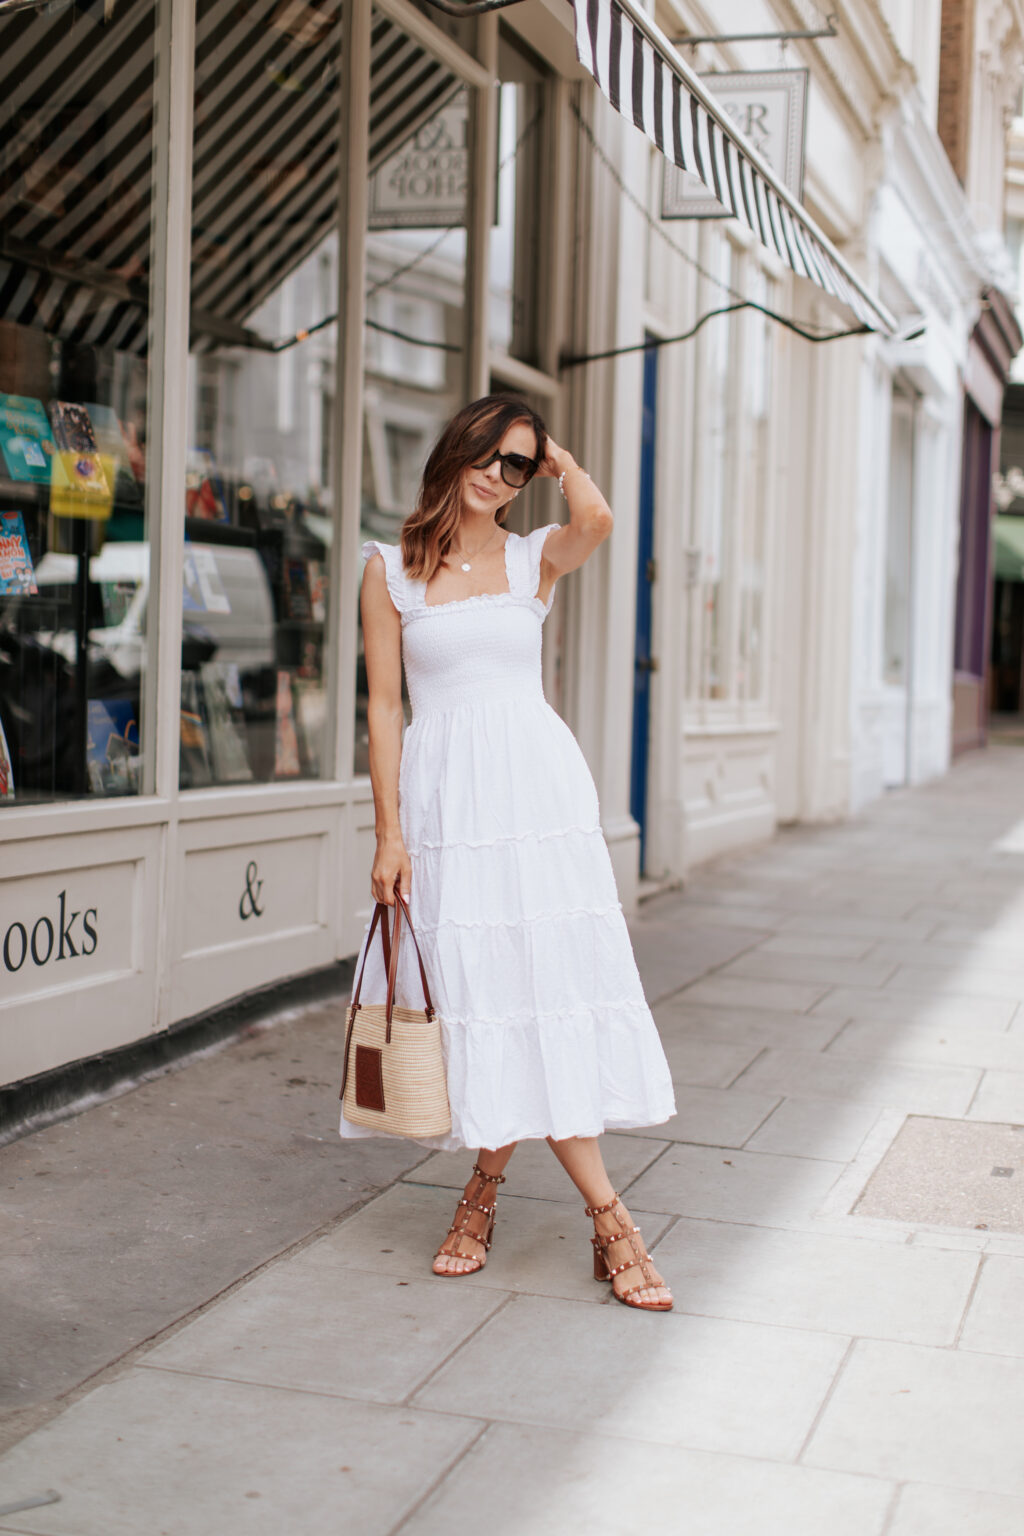 White Dress Options I'm Eyeing This Summer | Alyson Haley